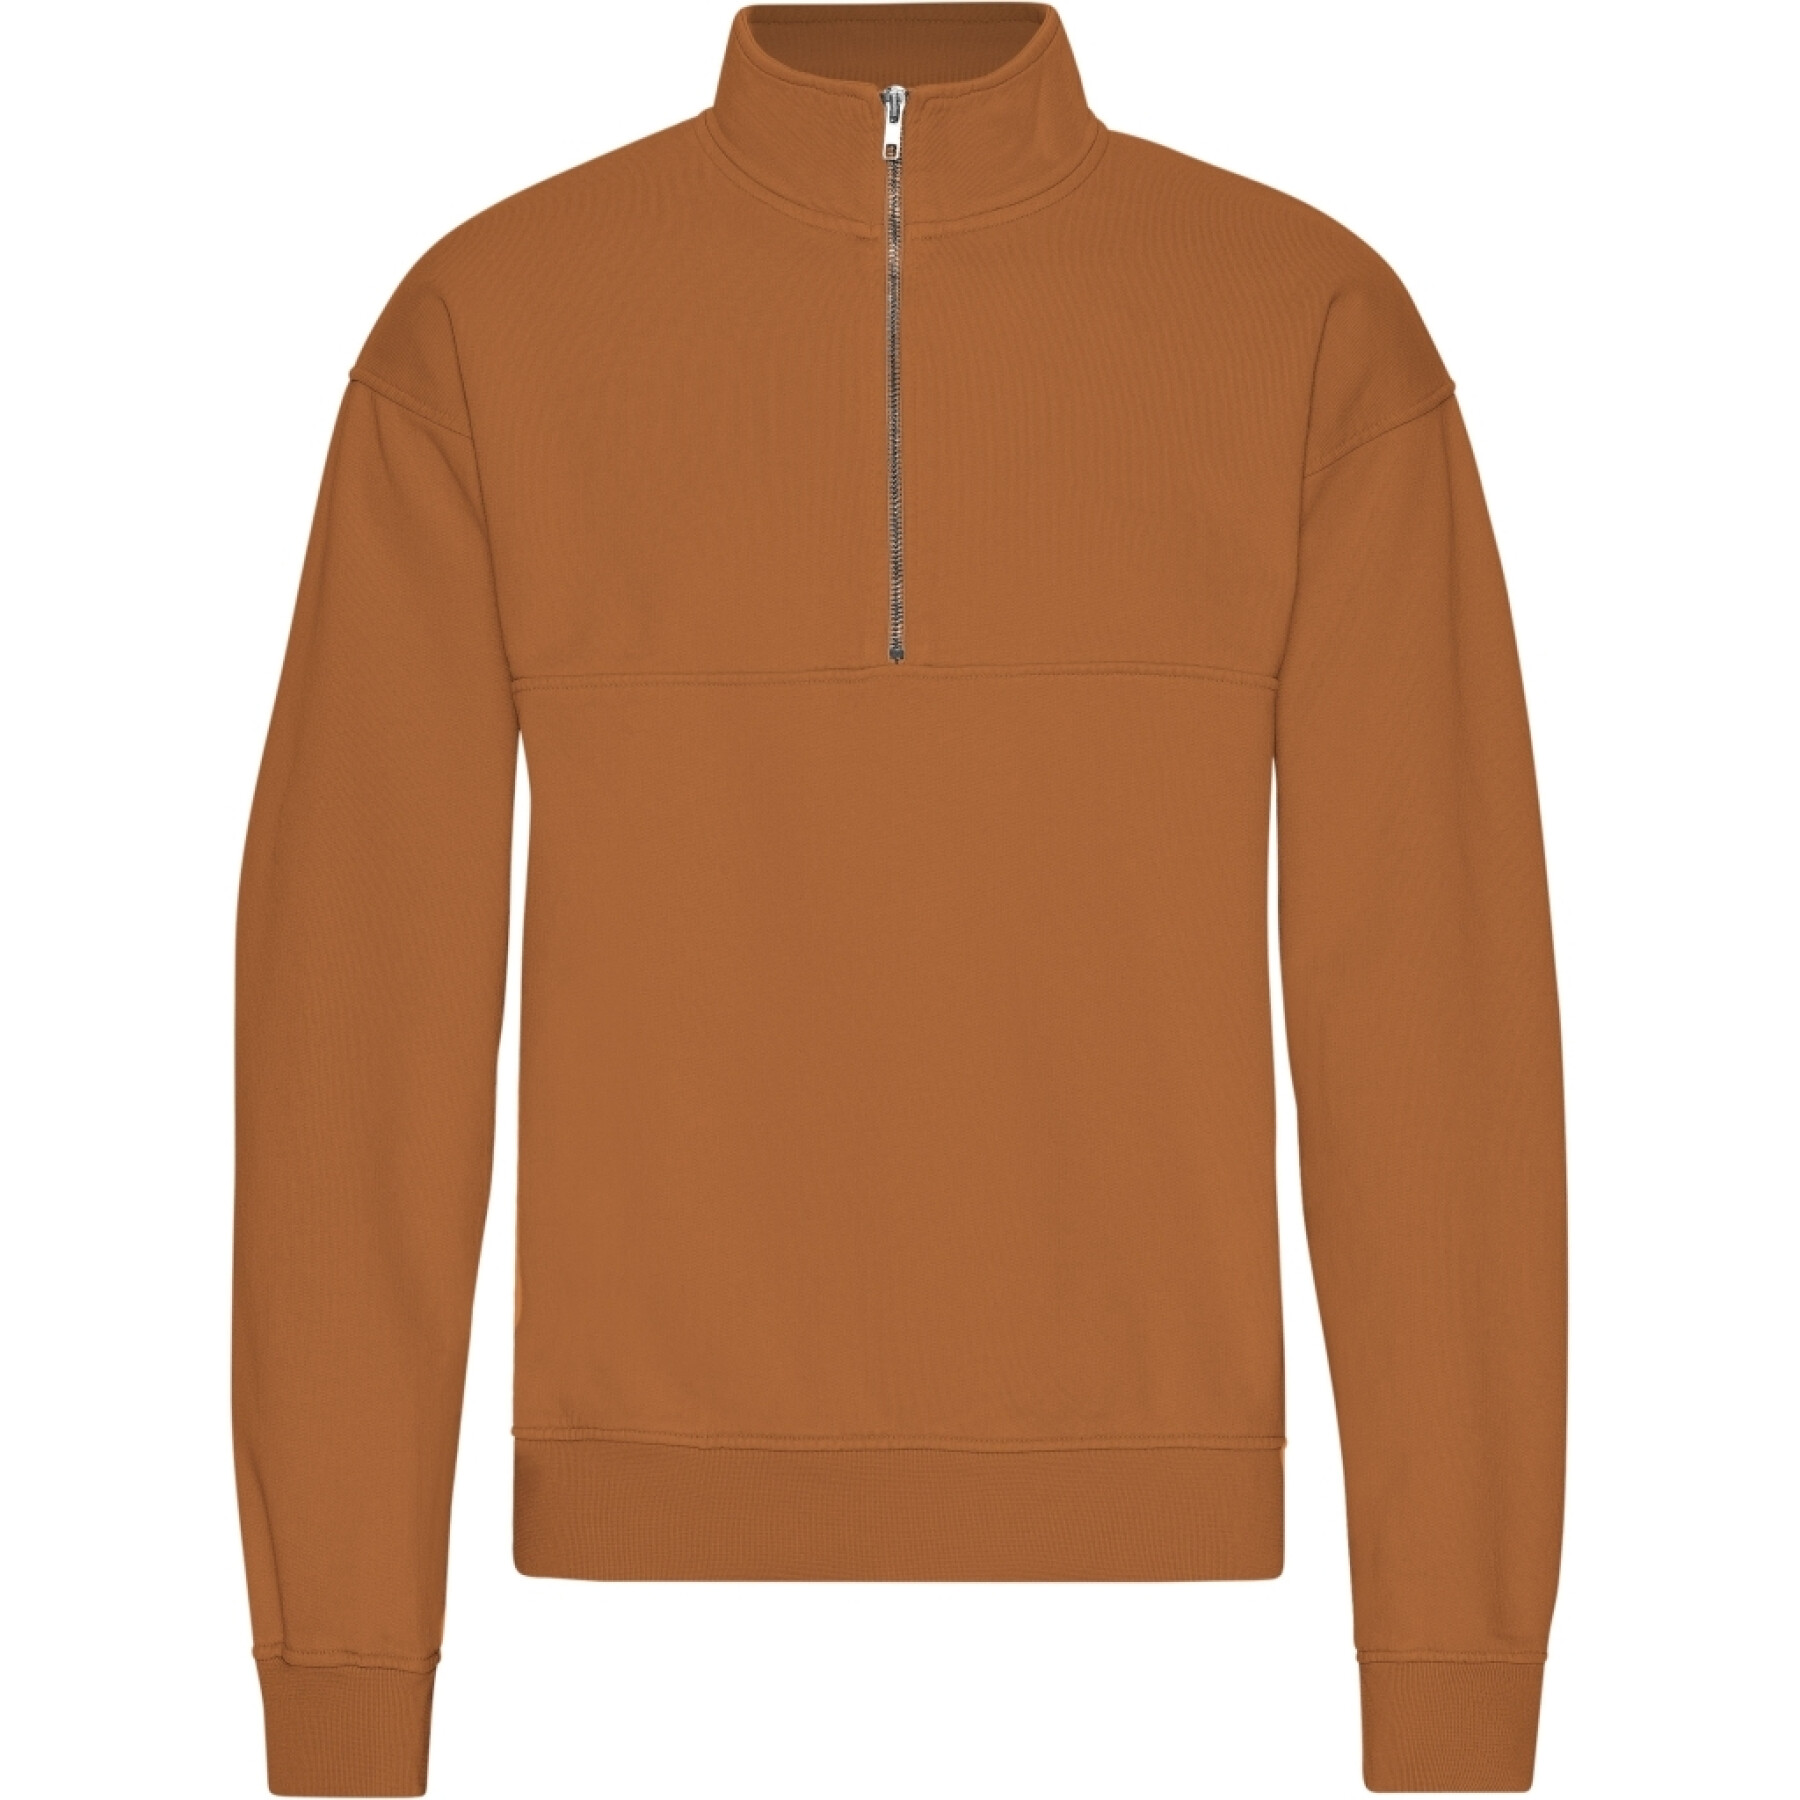 Sweatshirt 1/4 zip Colorful Standard Organic Ginger Brown